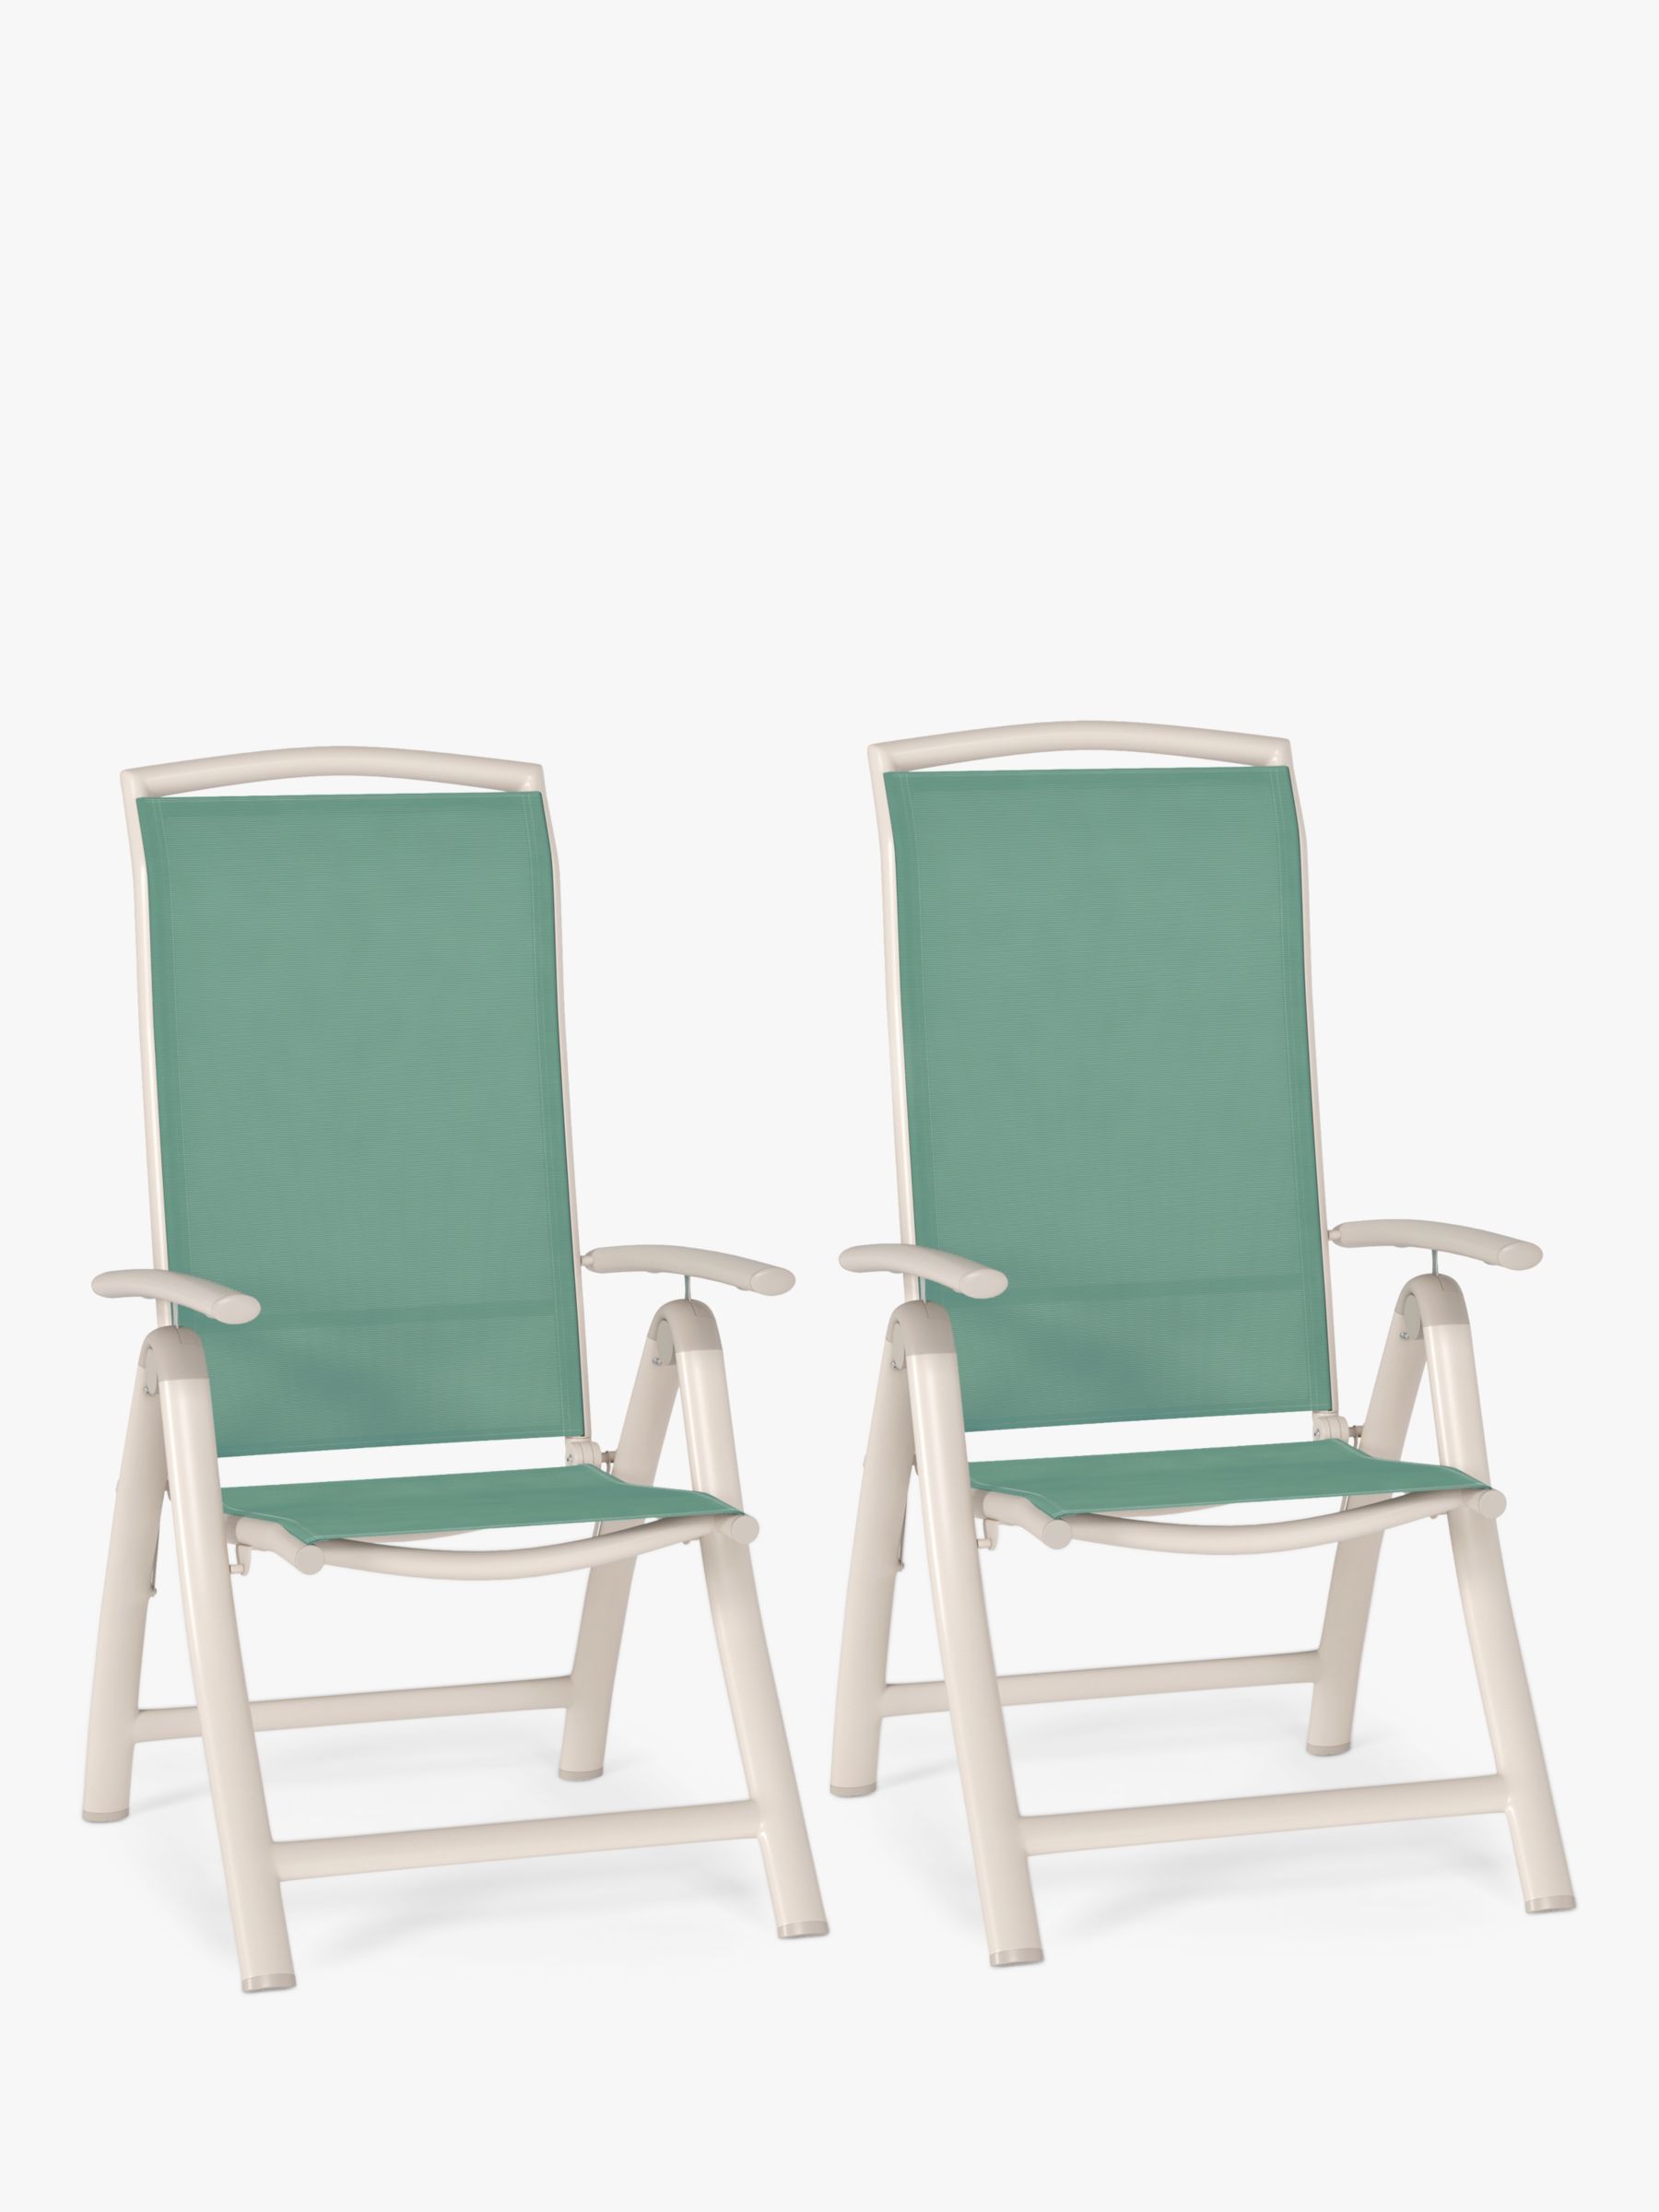 John Lewis & Partners Miami Garden Reclining Dining Chair, Set of 2 at John Lewis & Partners